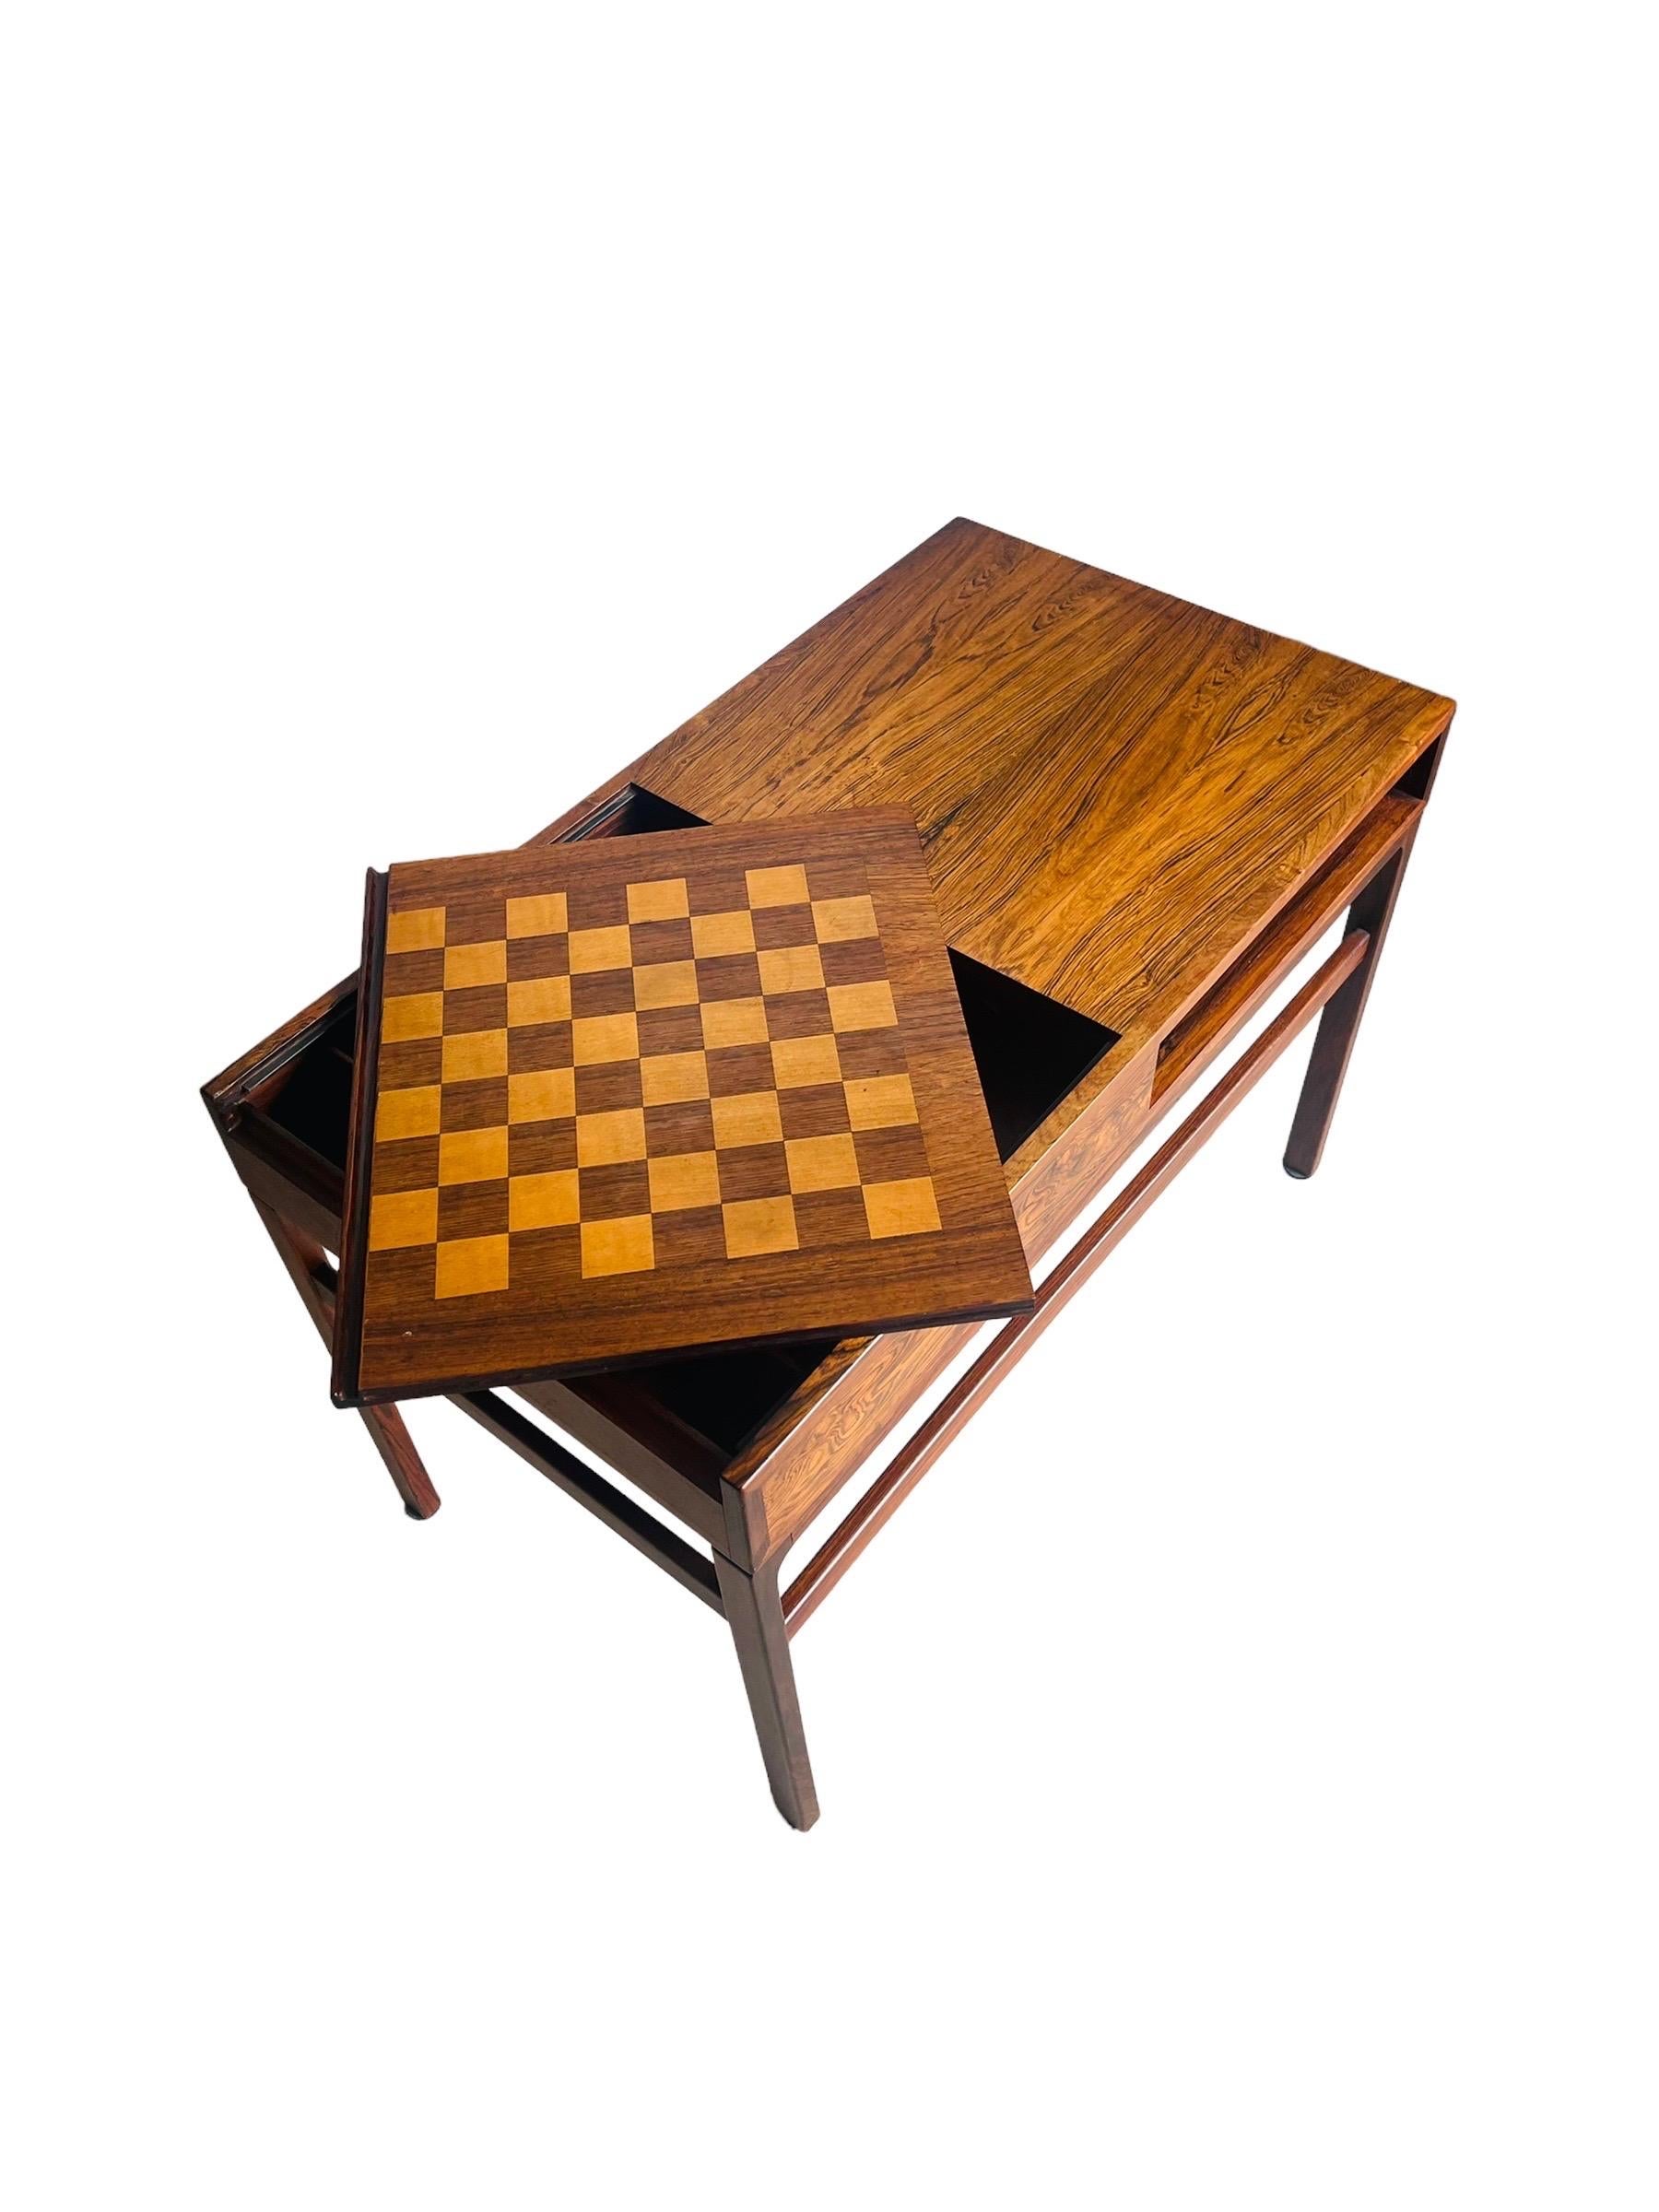 20th Century Danish Modern Rosewood Chess/Game Table by Illum Wikkelsø